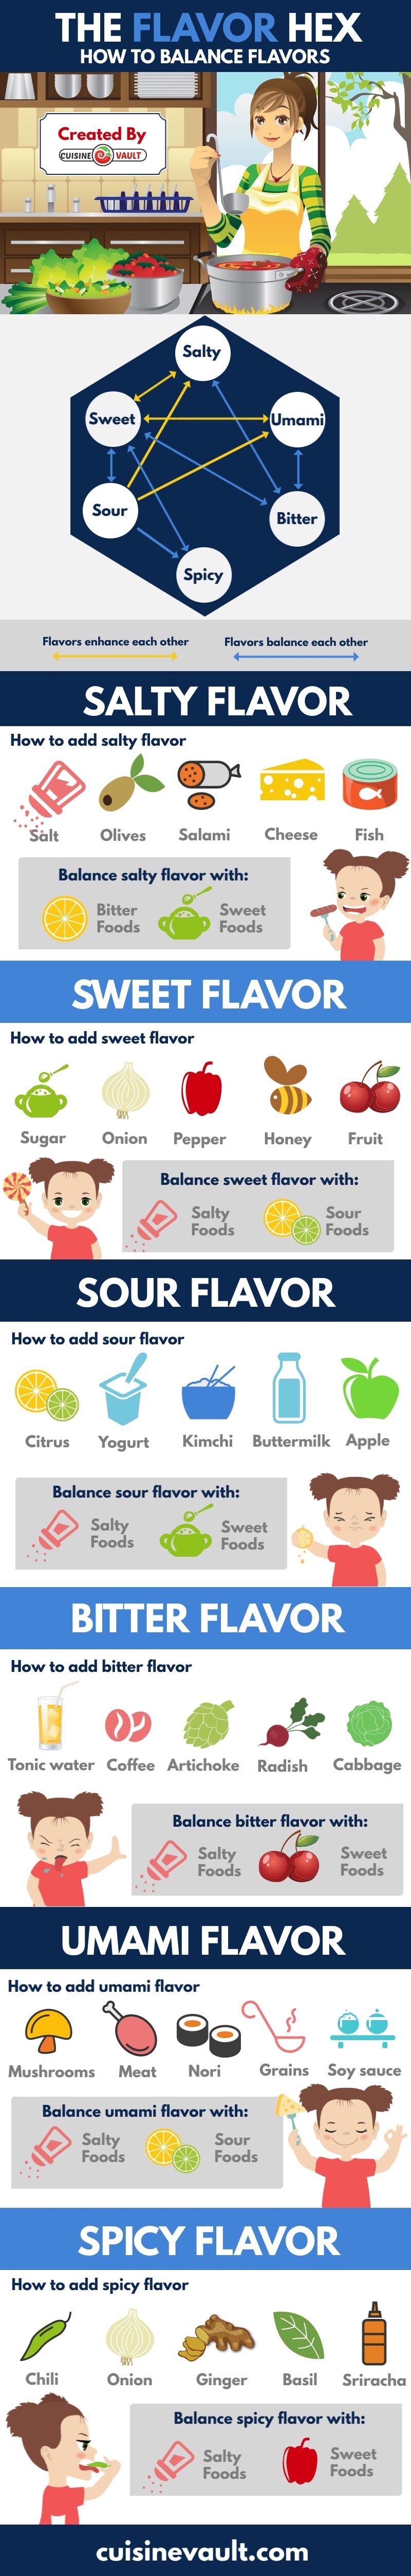 Flavor profile chart